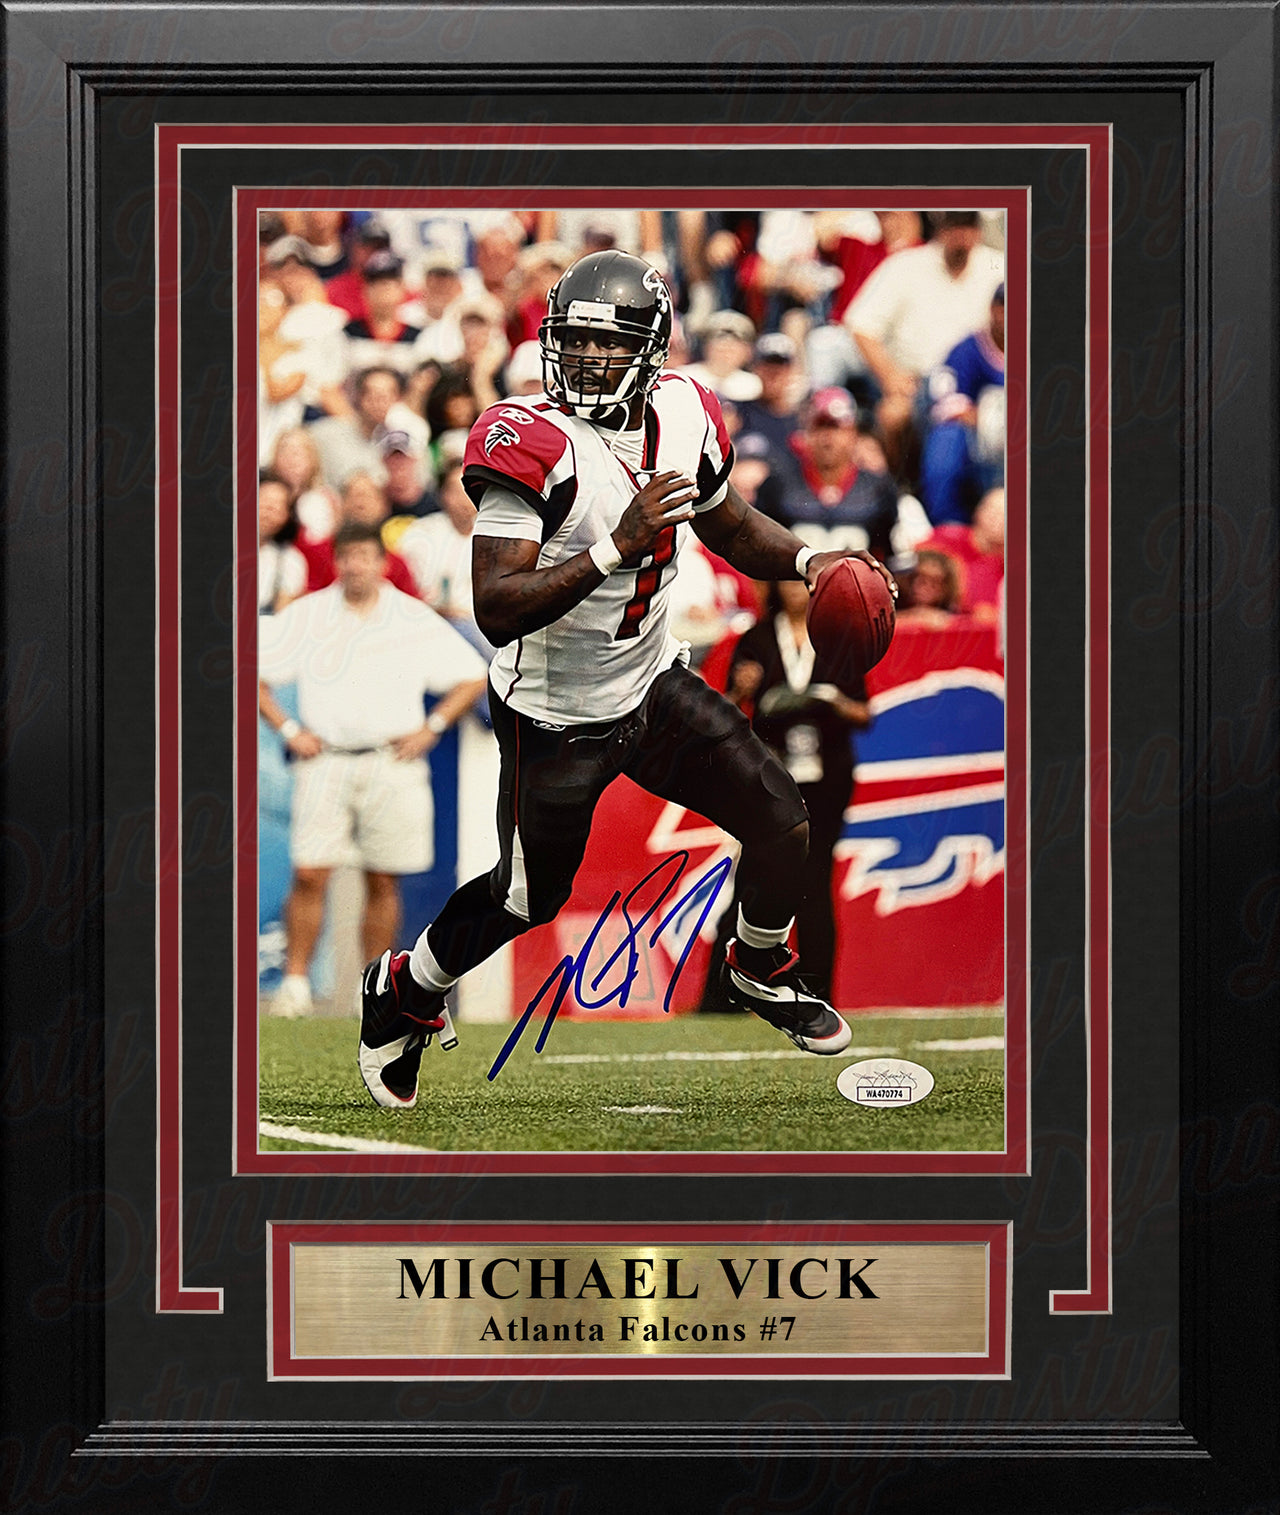 Michael Vick in Action Atlanta Falcons Autographed 8" x 10" Framed Football Photo - Dynasty Sports & Framing 